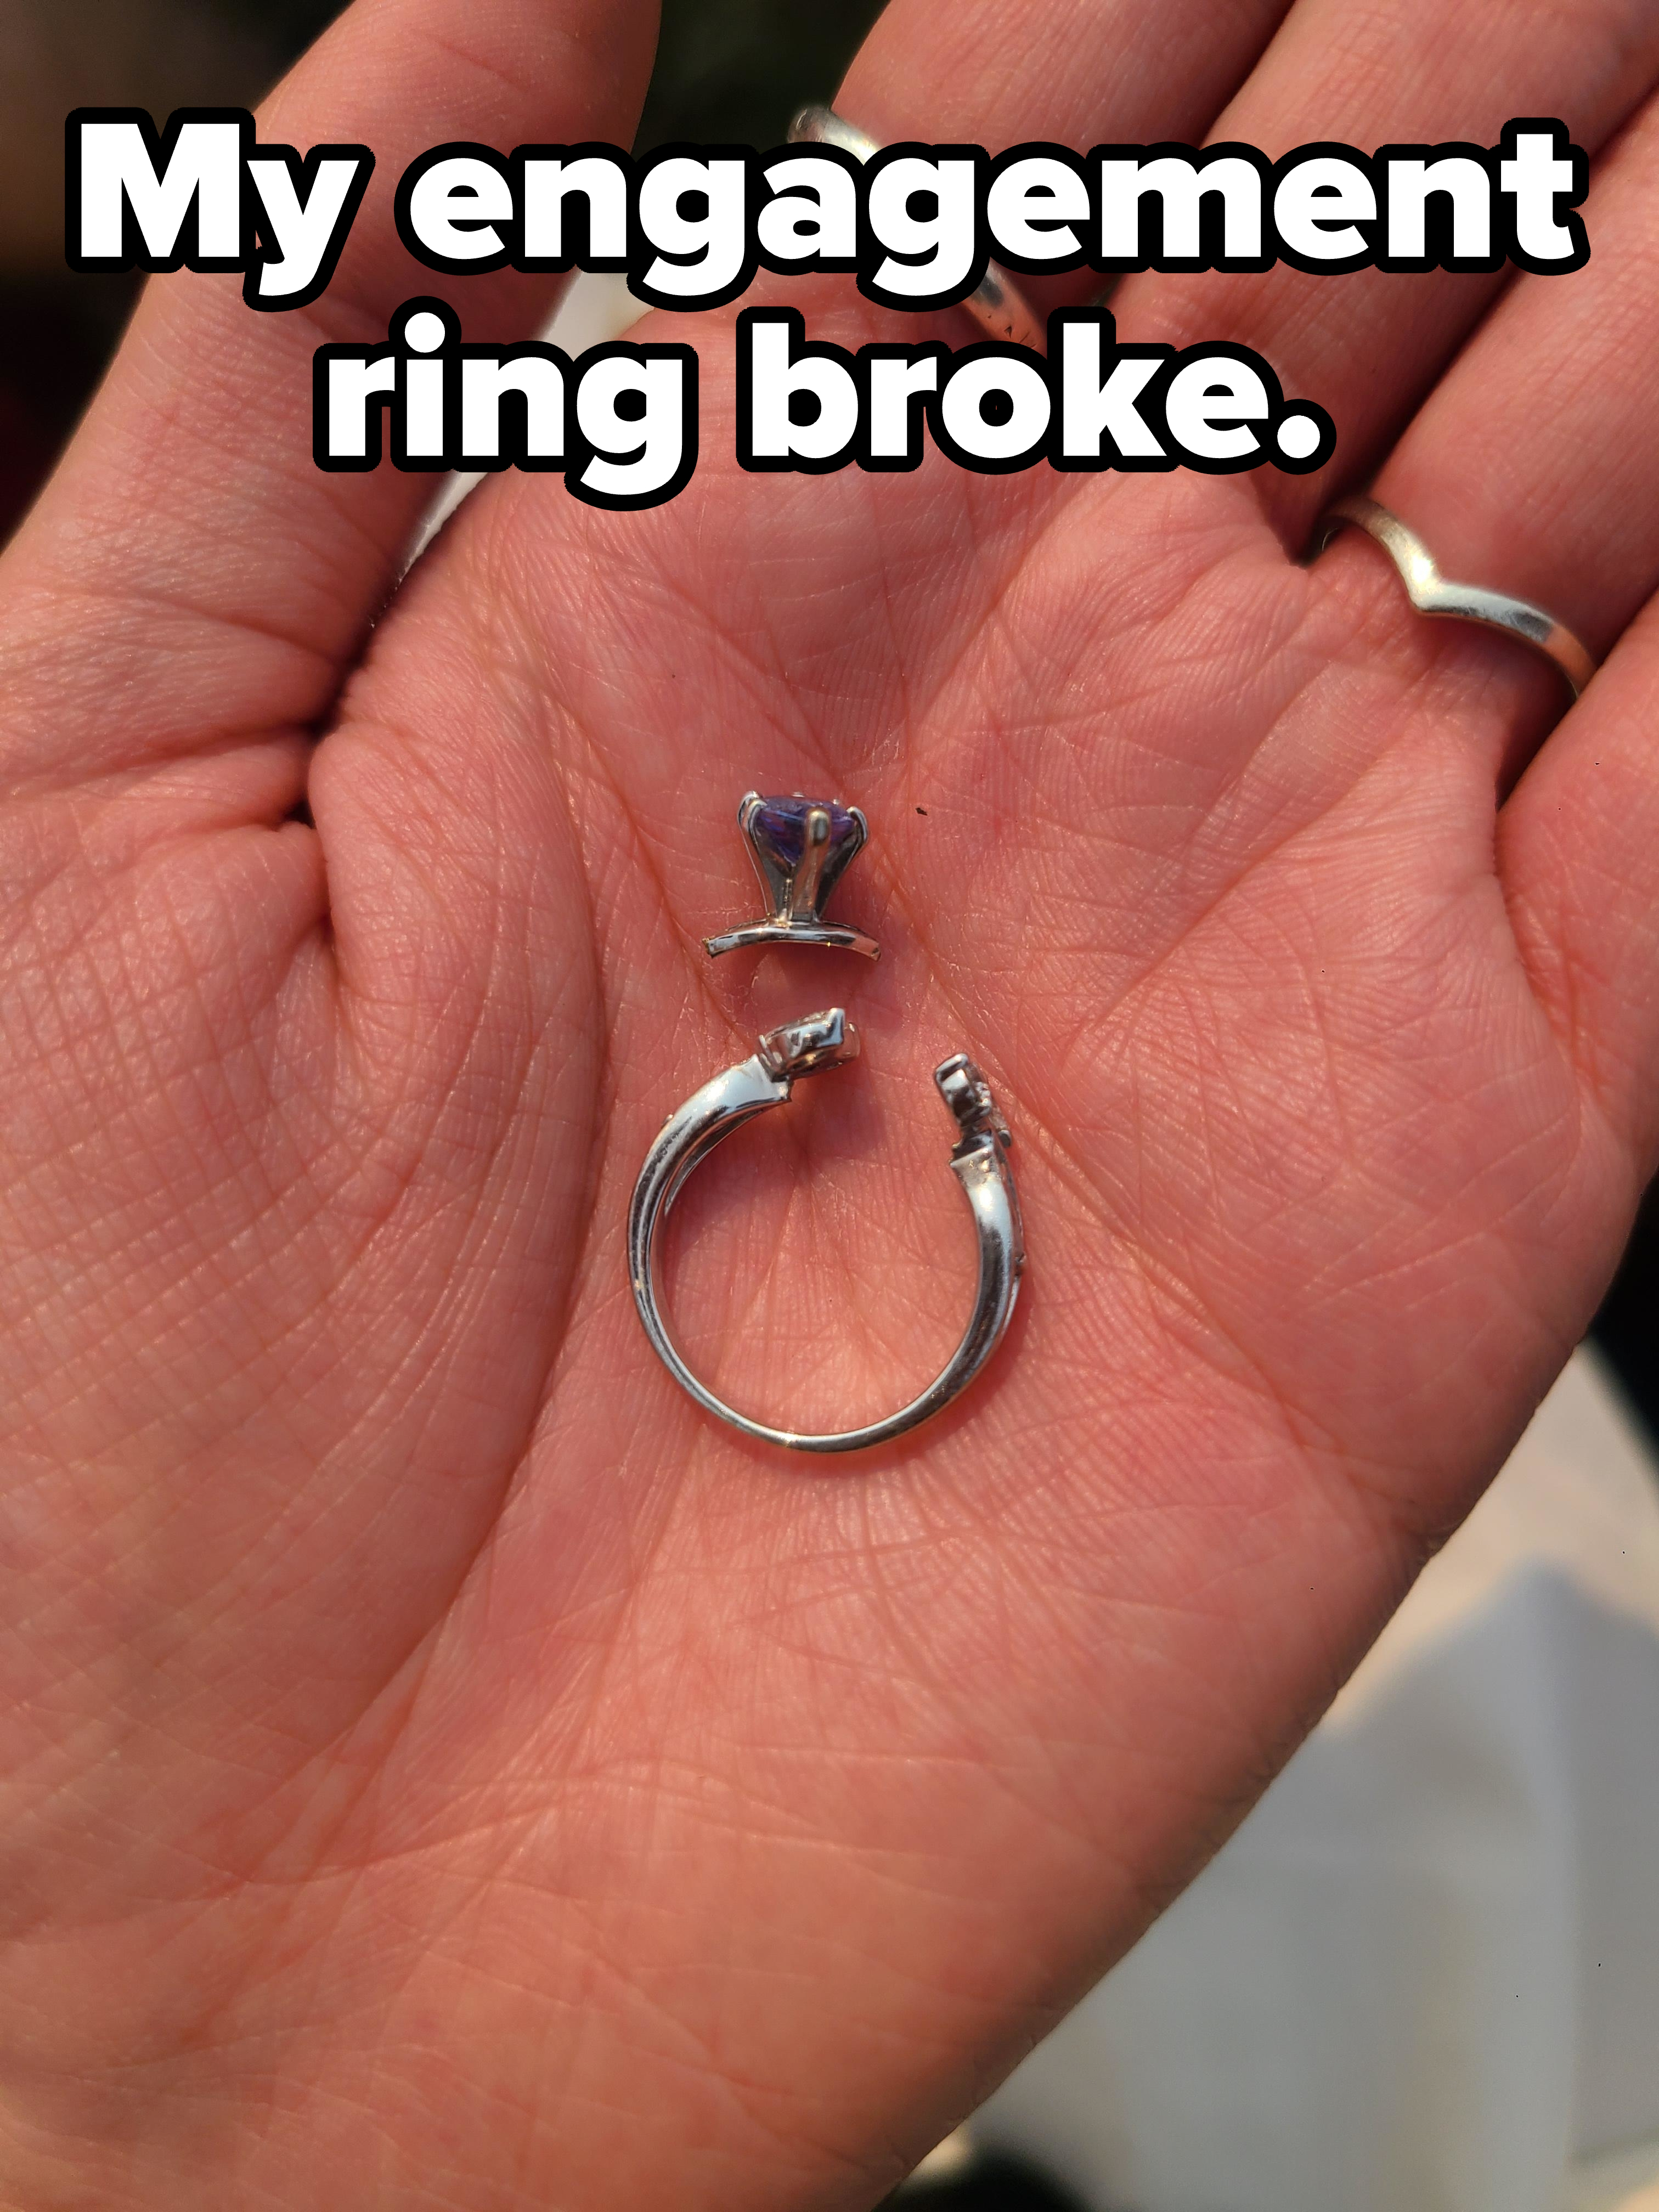 A broken engagement ring